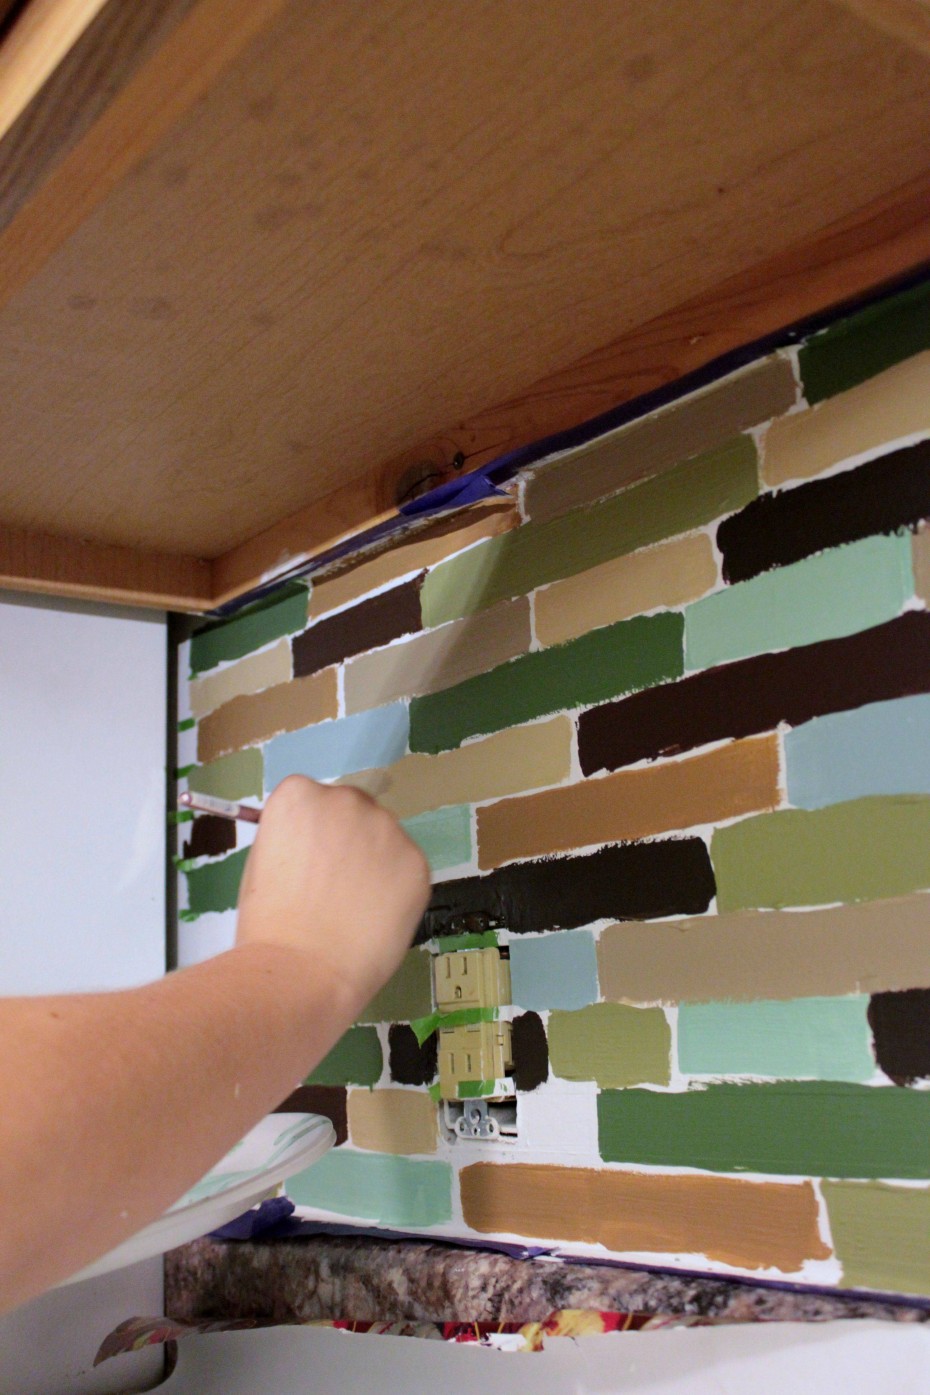 painting the tile for diy backsplash project